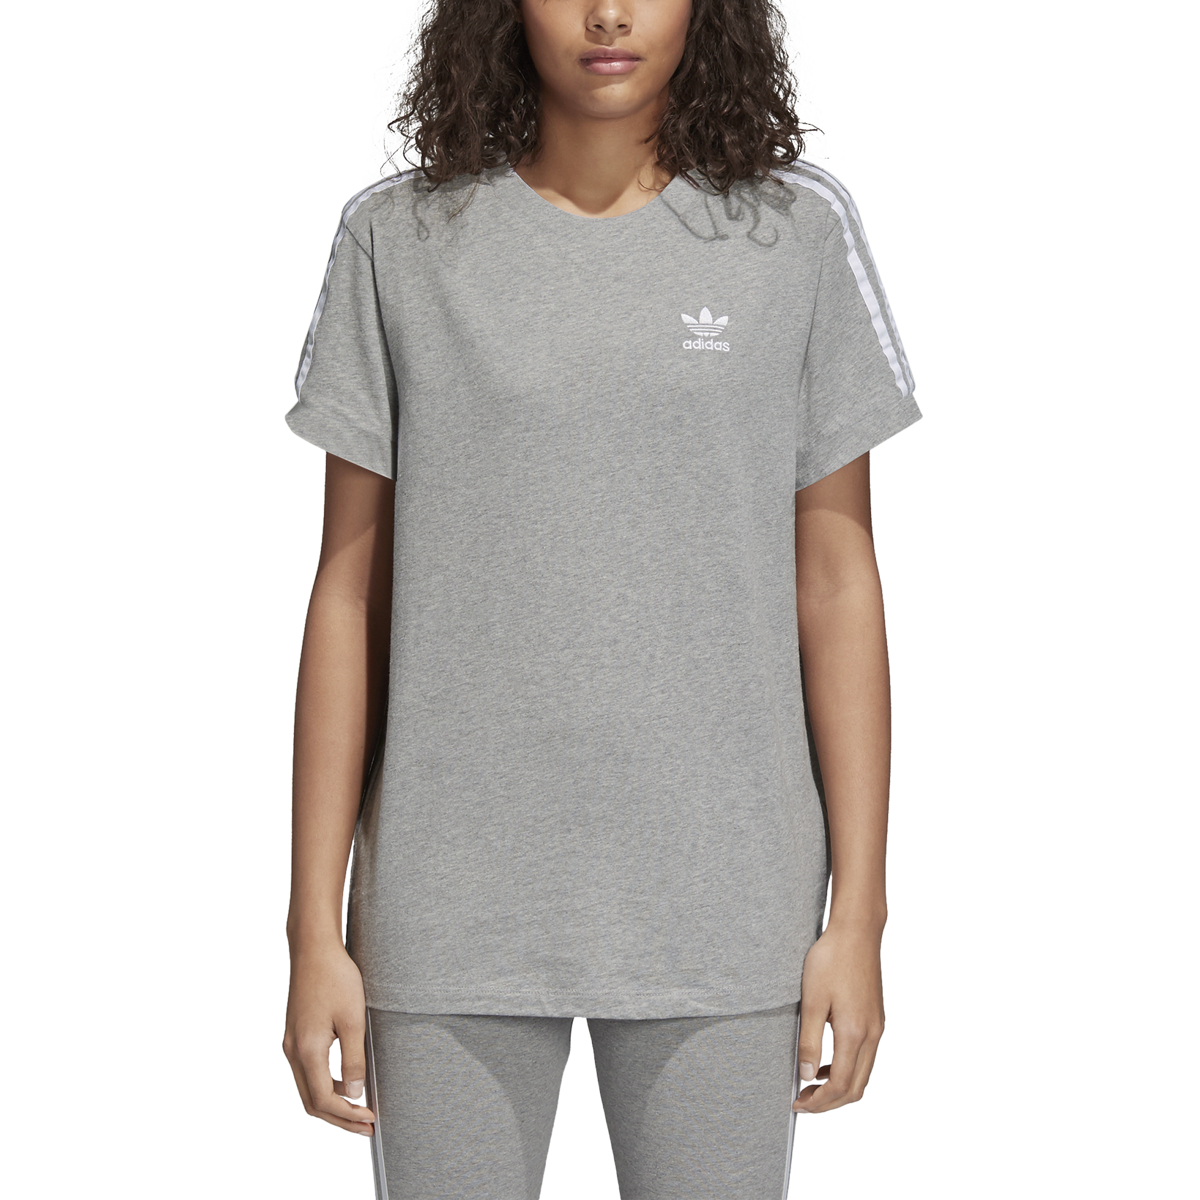 Adidas Originals 3-Stripes Women's Fashion Shirt Grey-White cy4982 | eBay